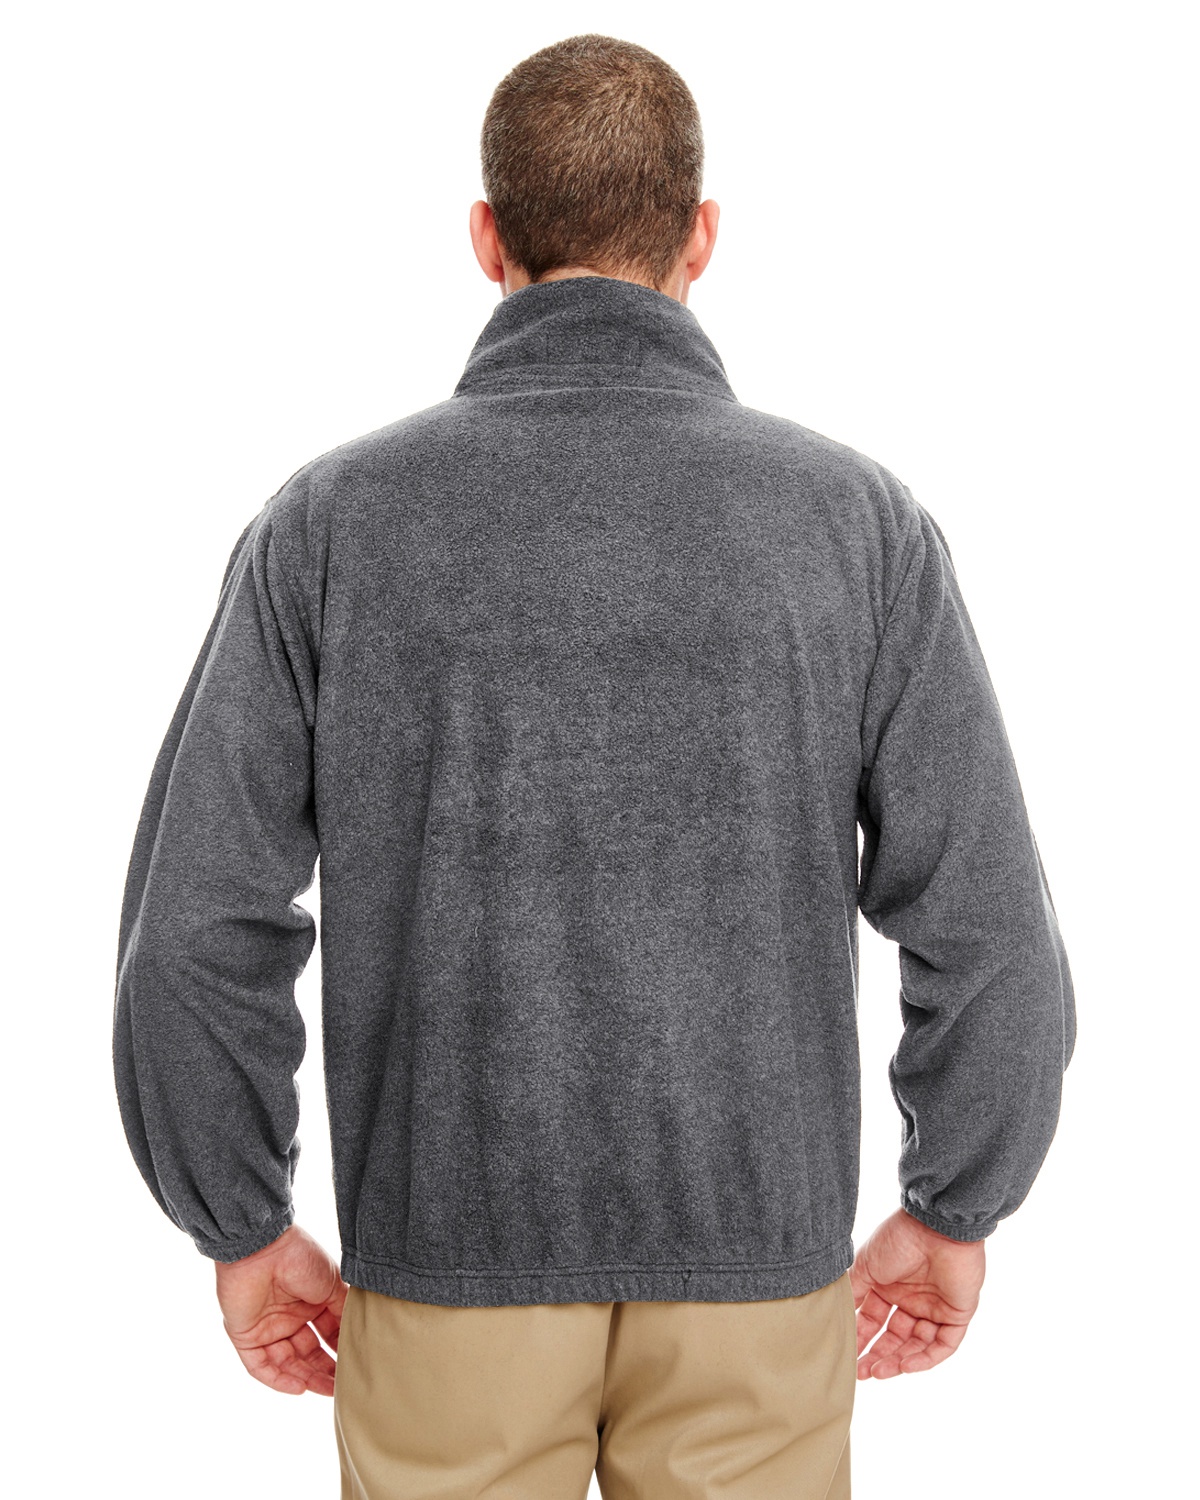 Harriton Men's 8 oz. Full-Zip Fleece - CHARCOAL - S M990-simple at   Men's Clothing store: Fleece Outerwear Jackets